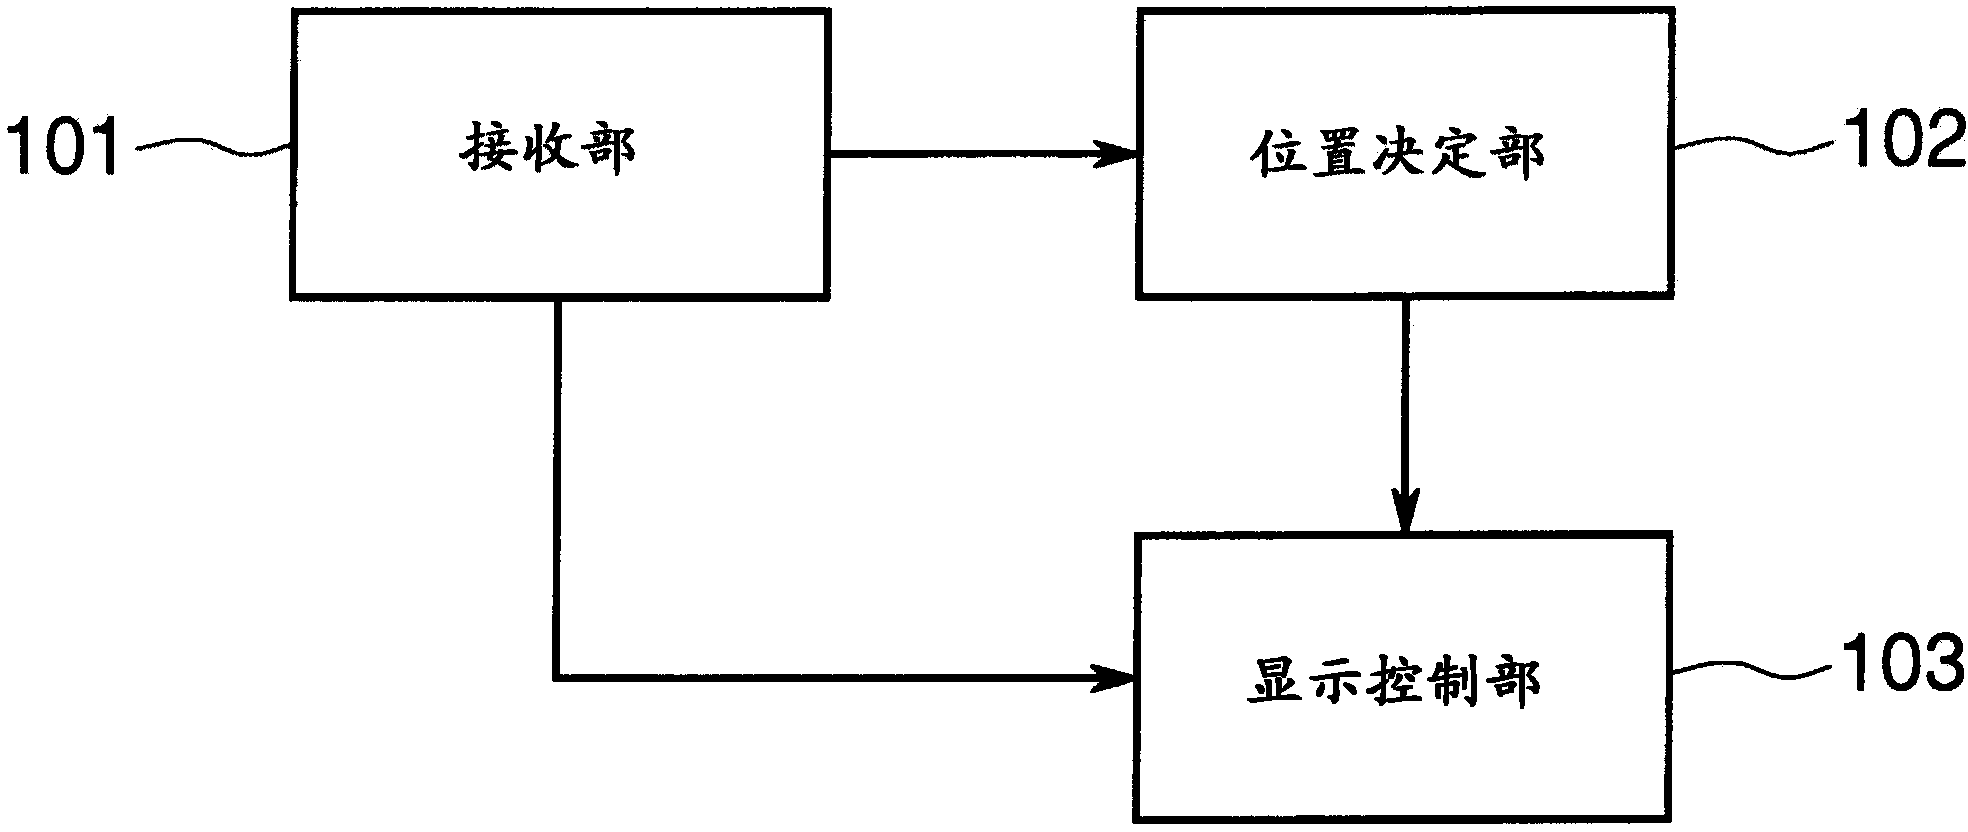 Presentation system